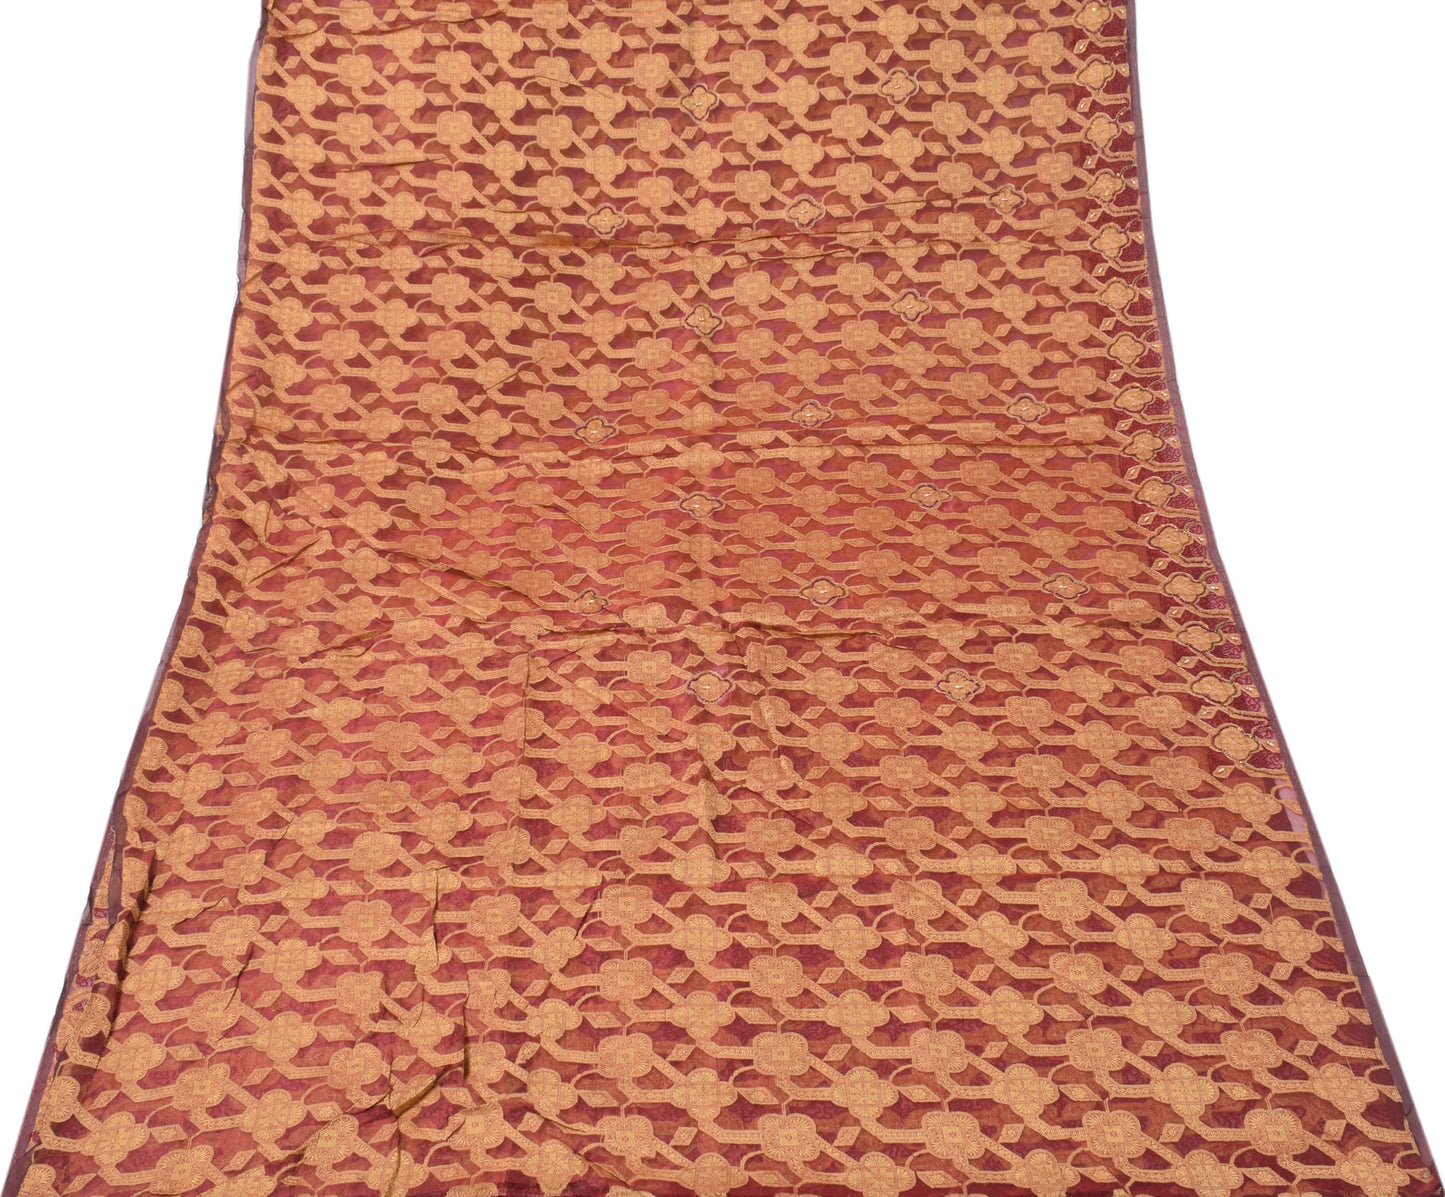 Sushila Vintage Maroon Indian Saree Pure Organza Woven Floral Sari Fabric